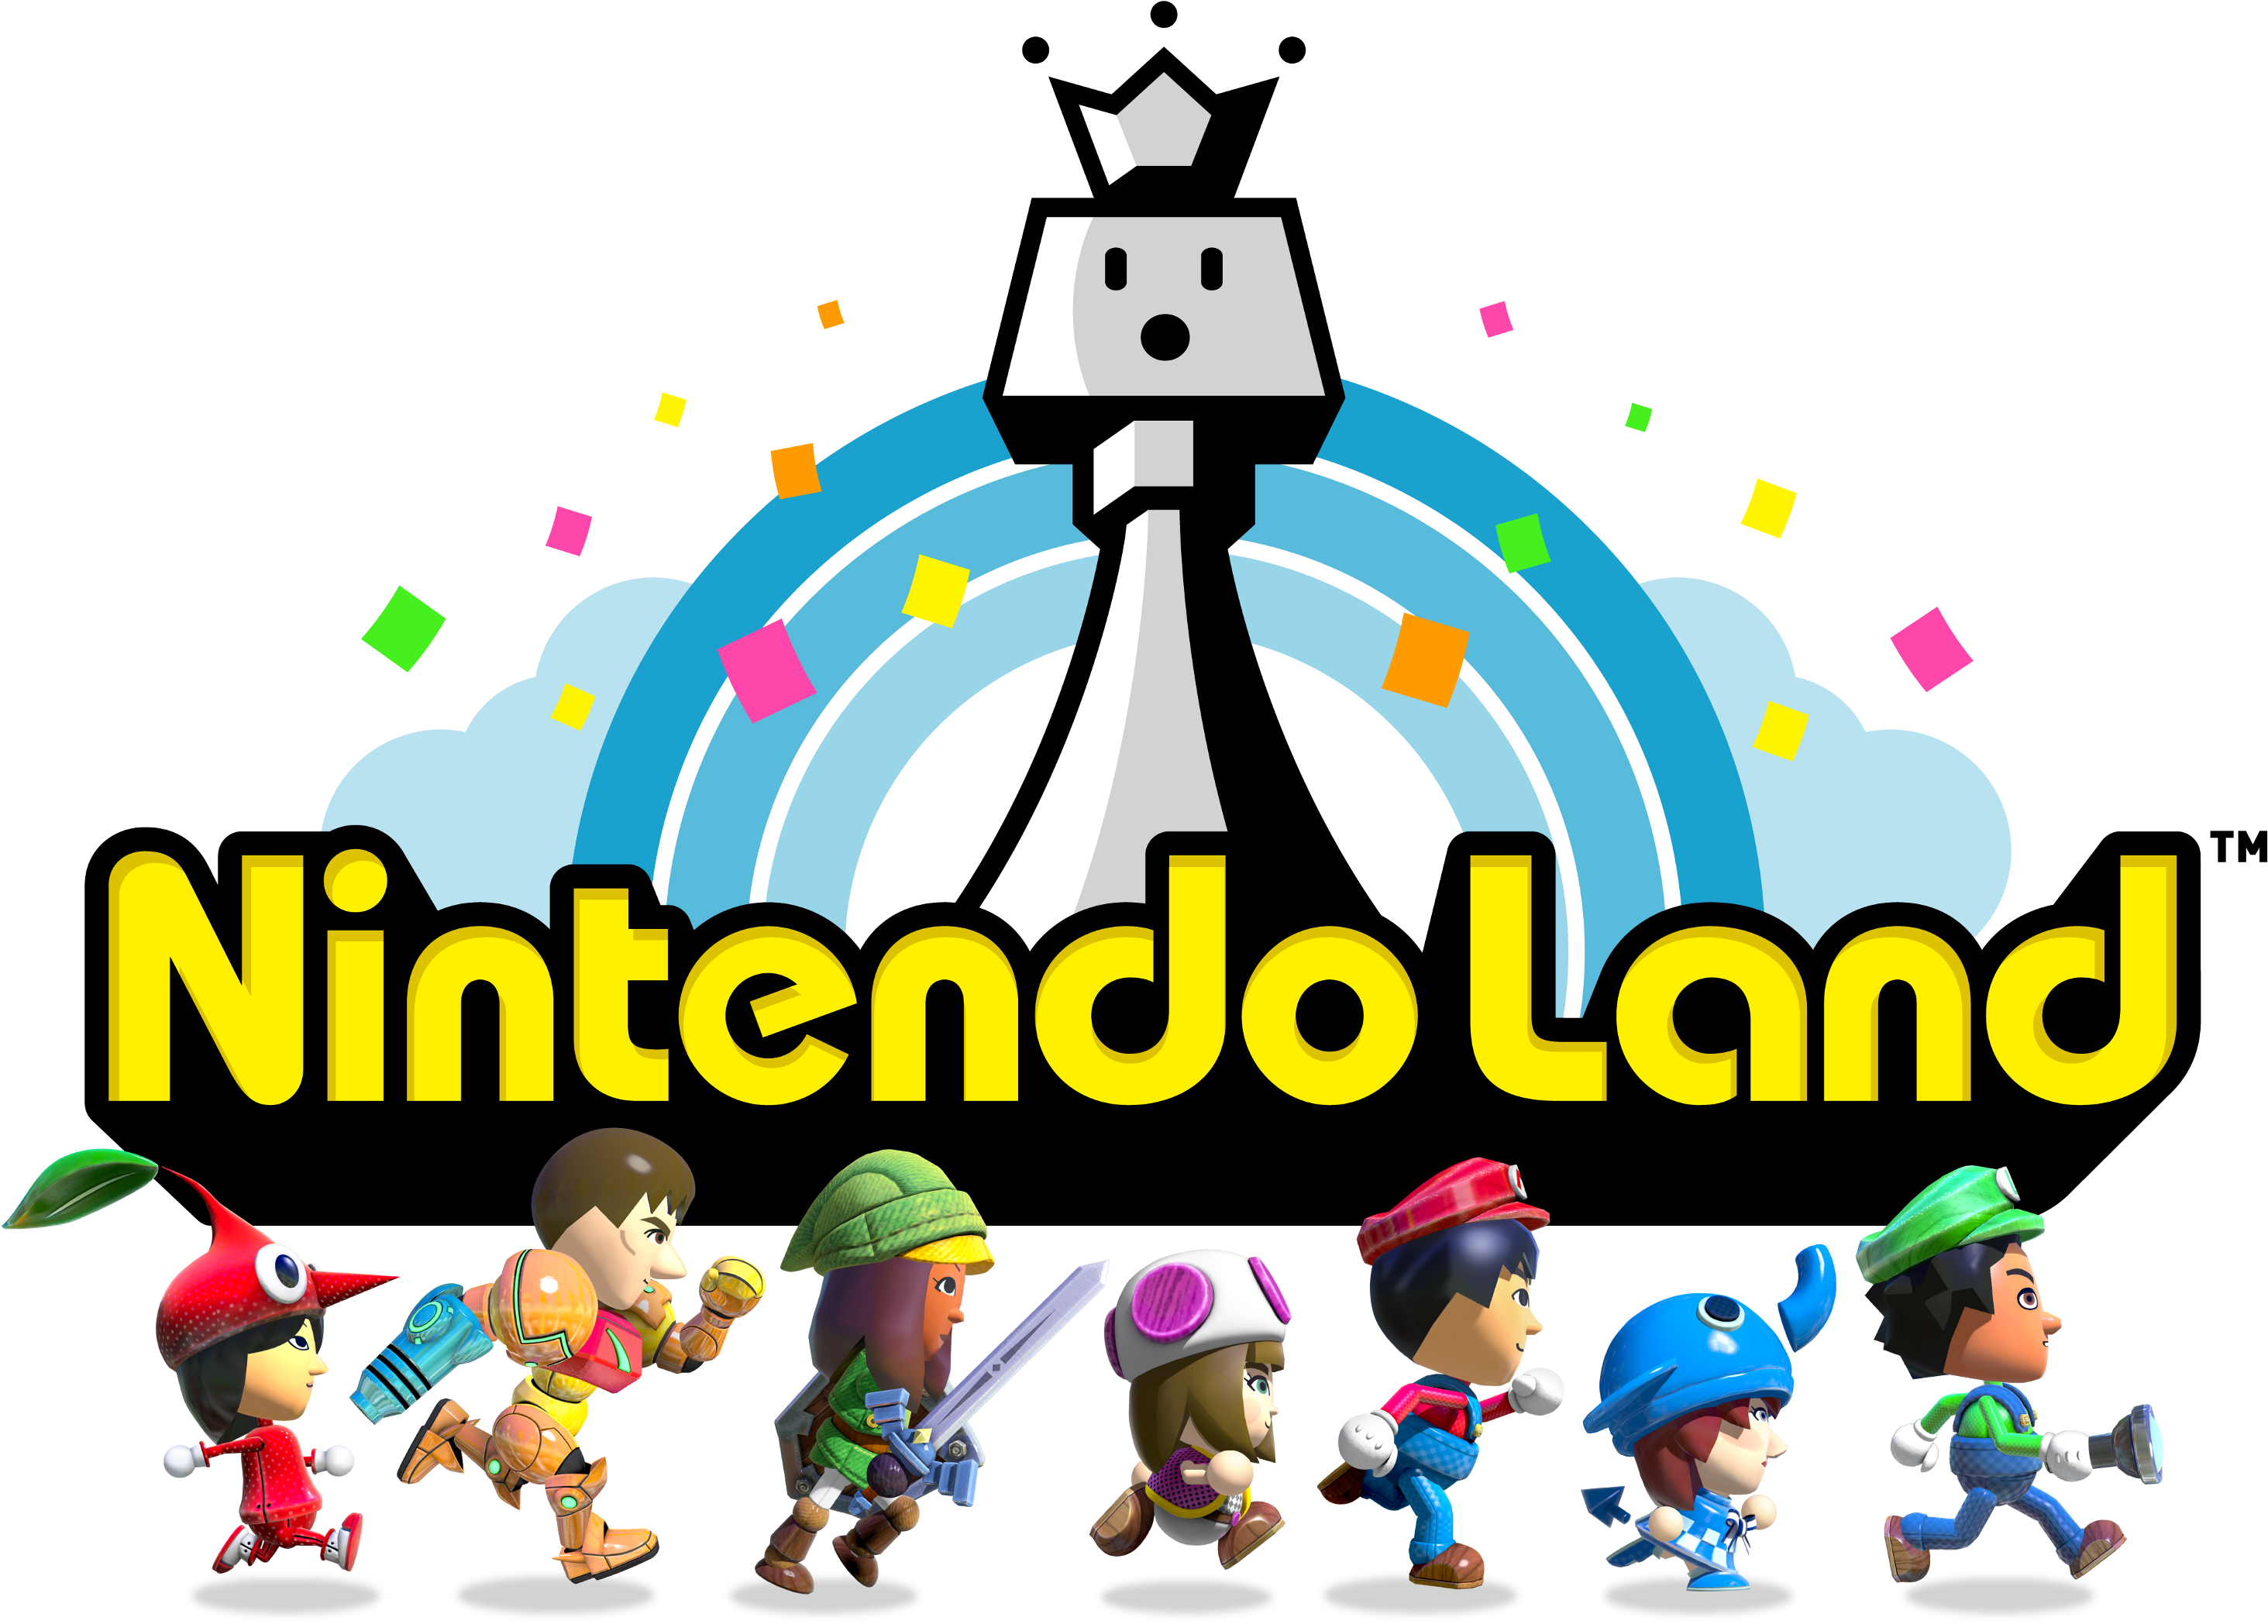 Nl-character Group Logo - Nintendo Land (3500x2700)